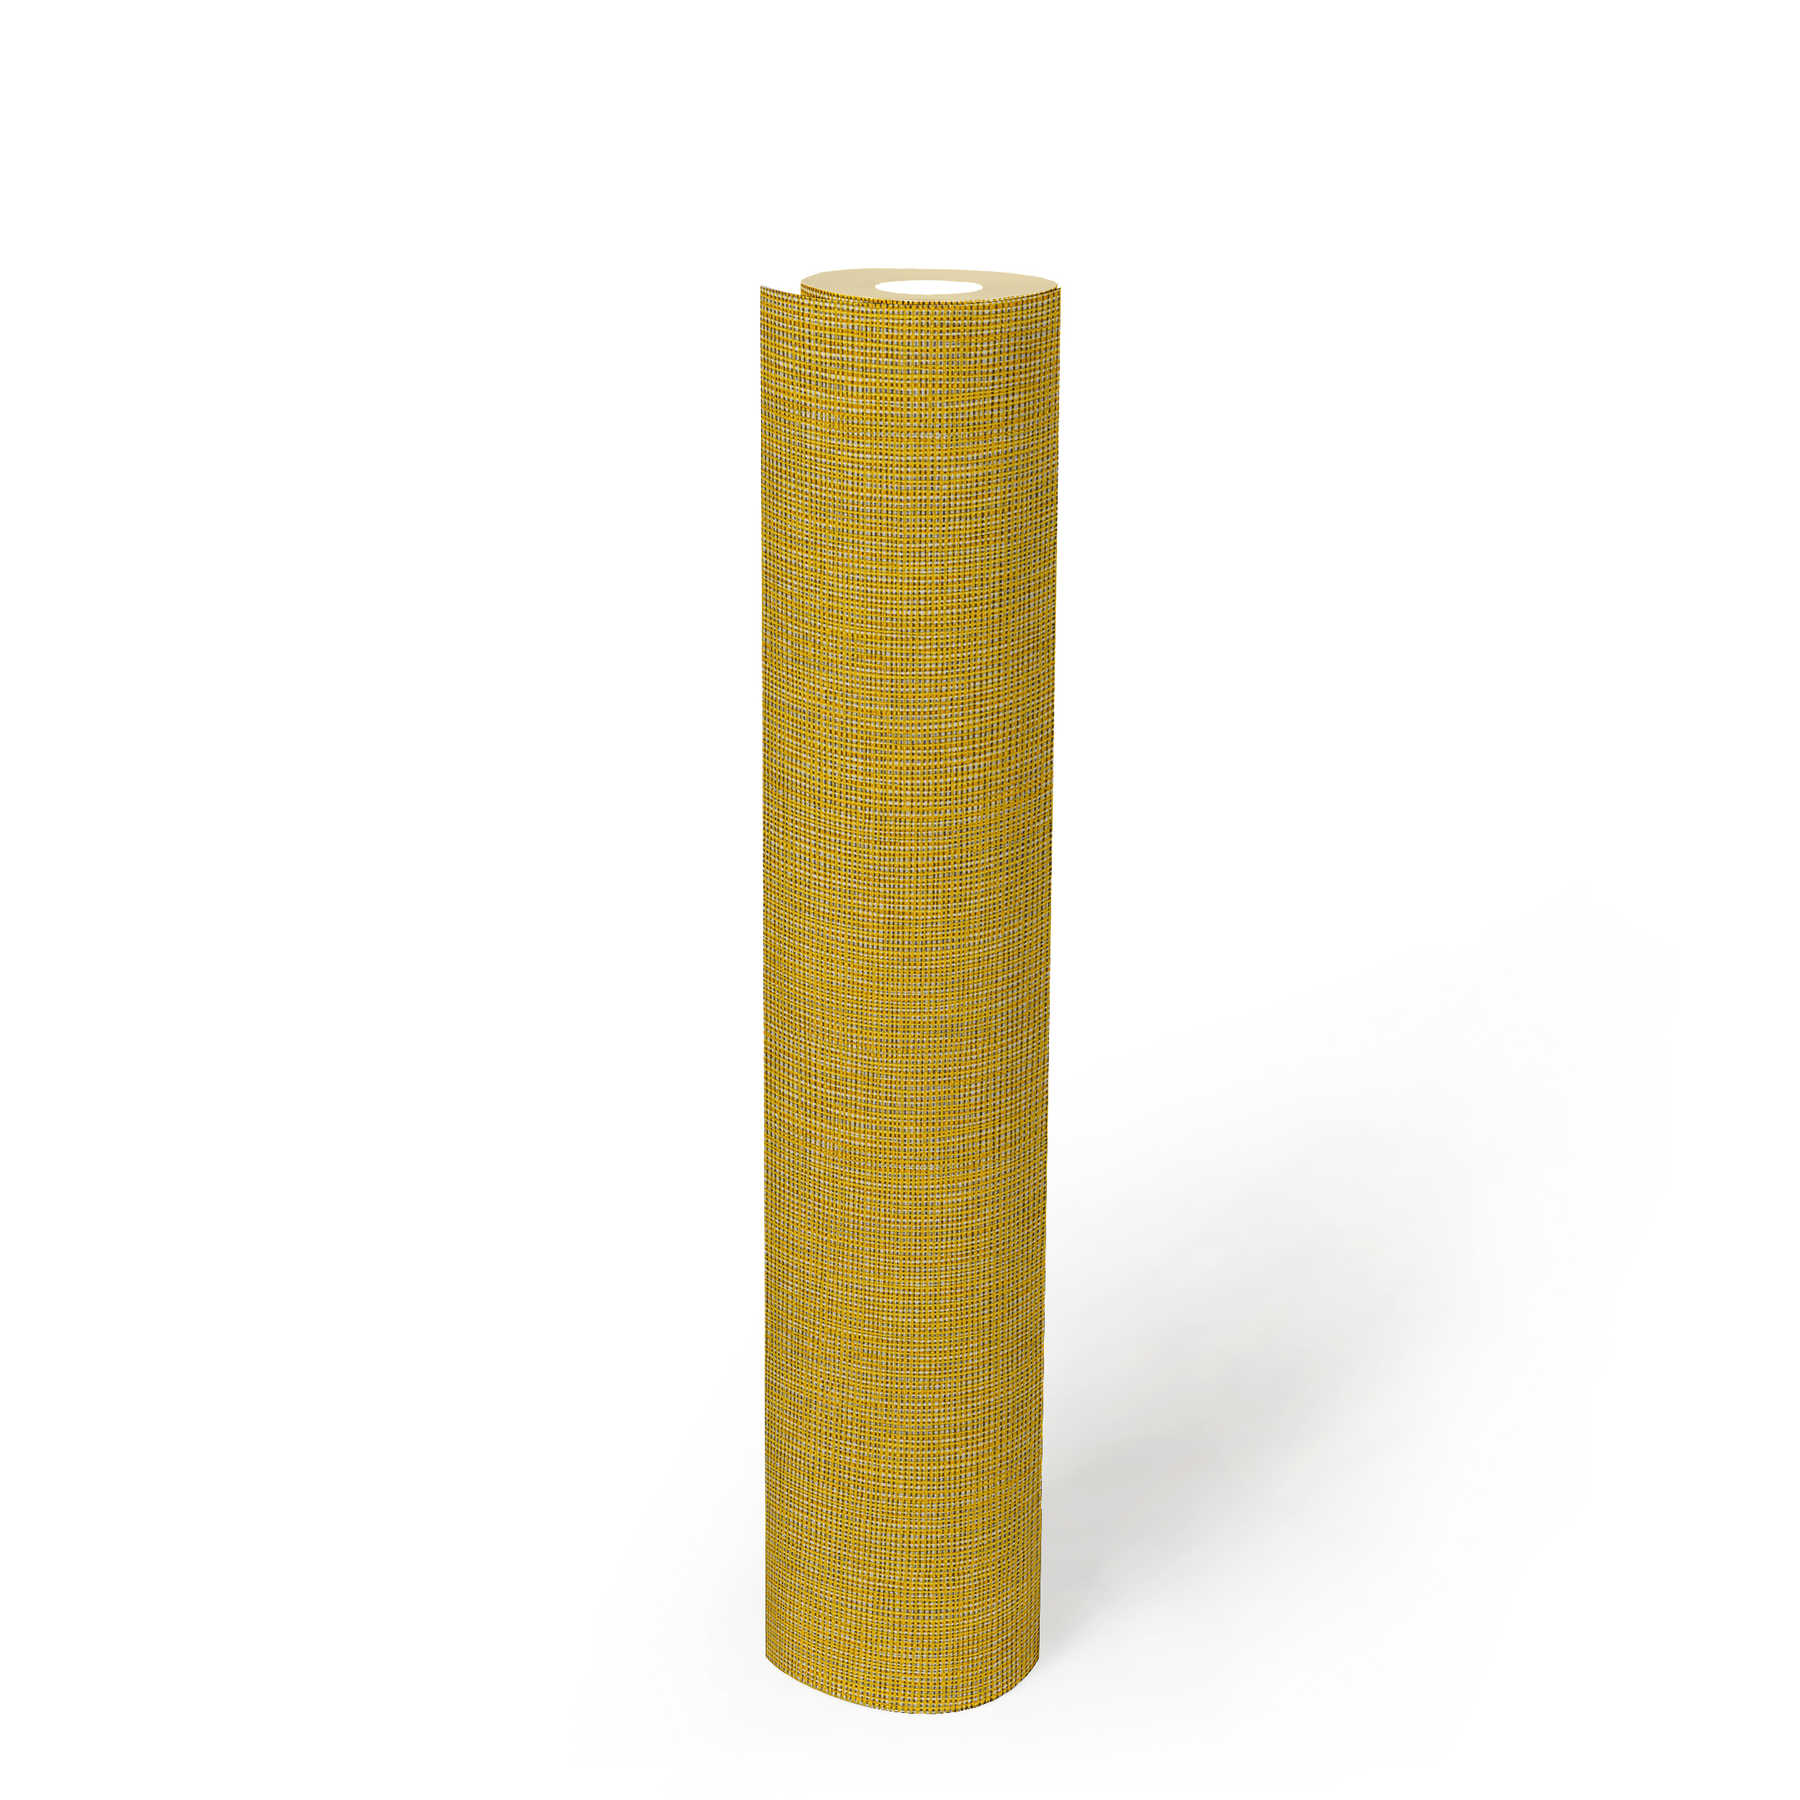             Uni-Tapete Textil Optik mit Details in Silber & Grau – Gelb, Grau, Silber
        